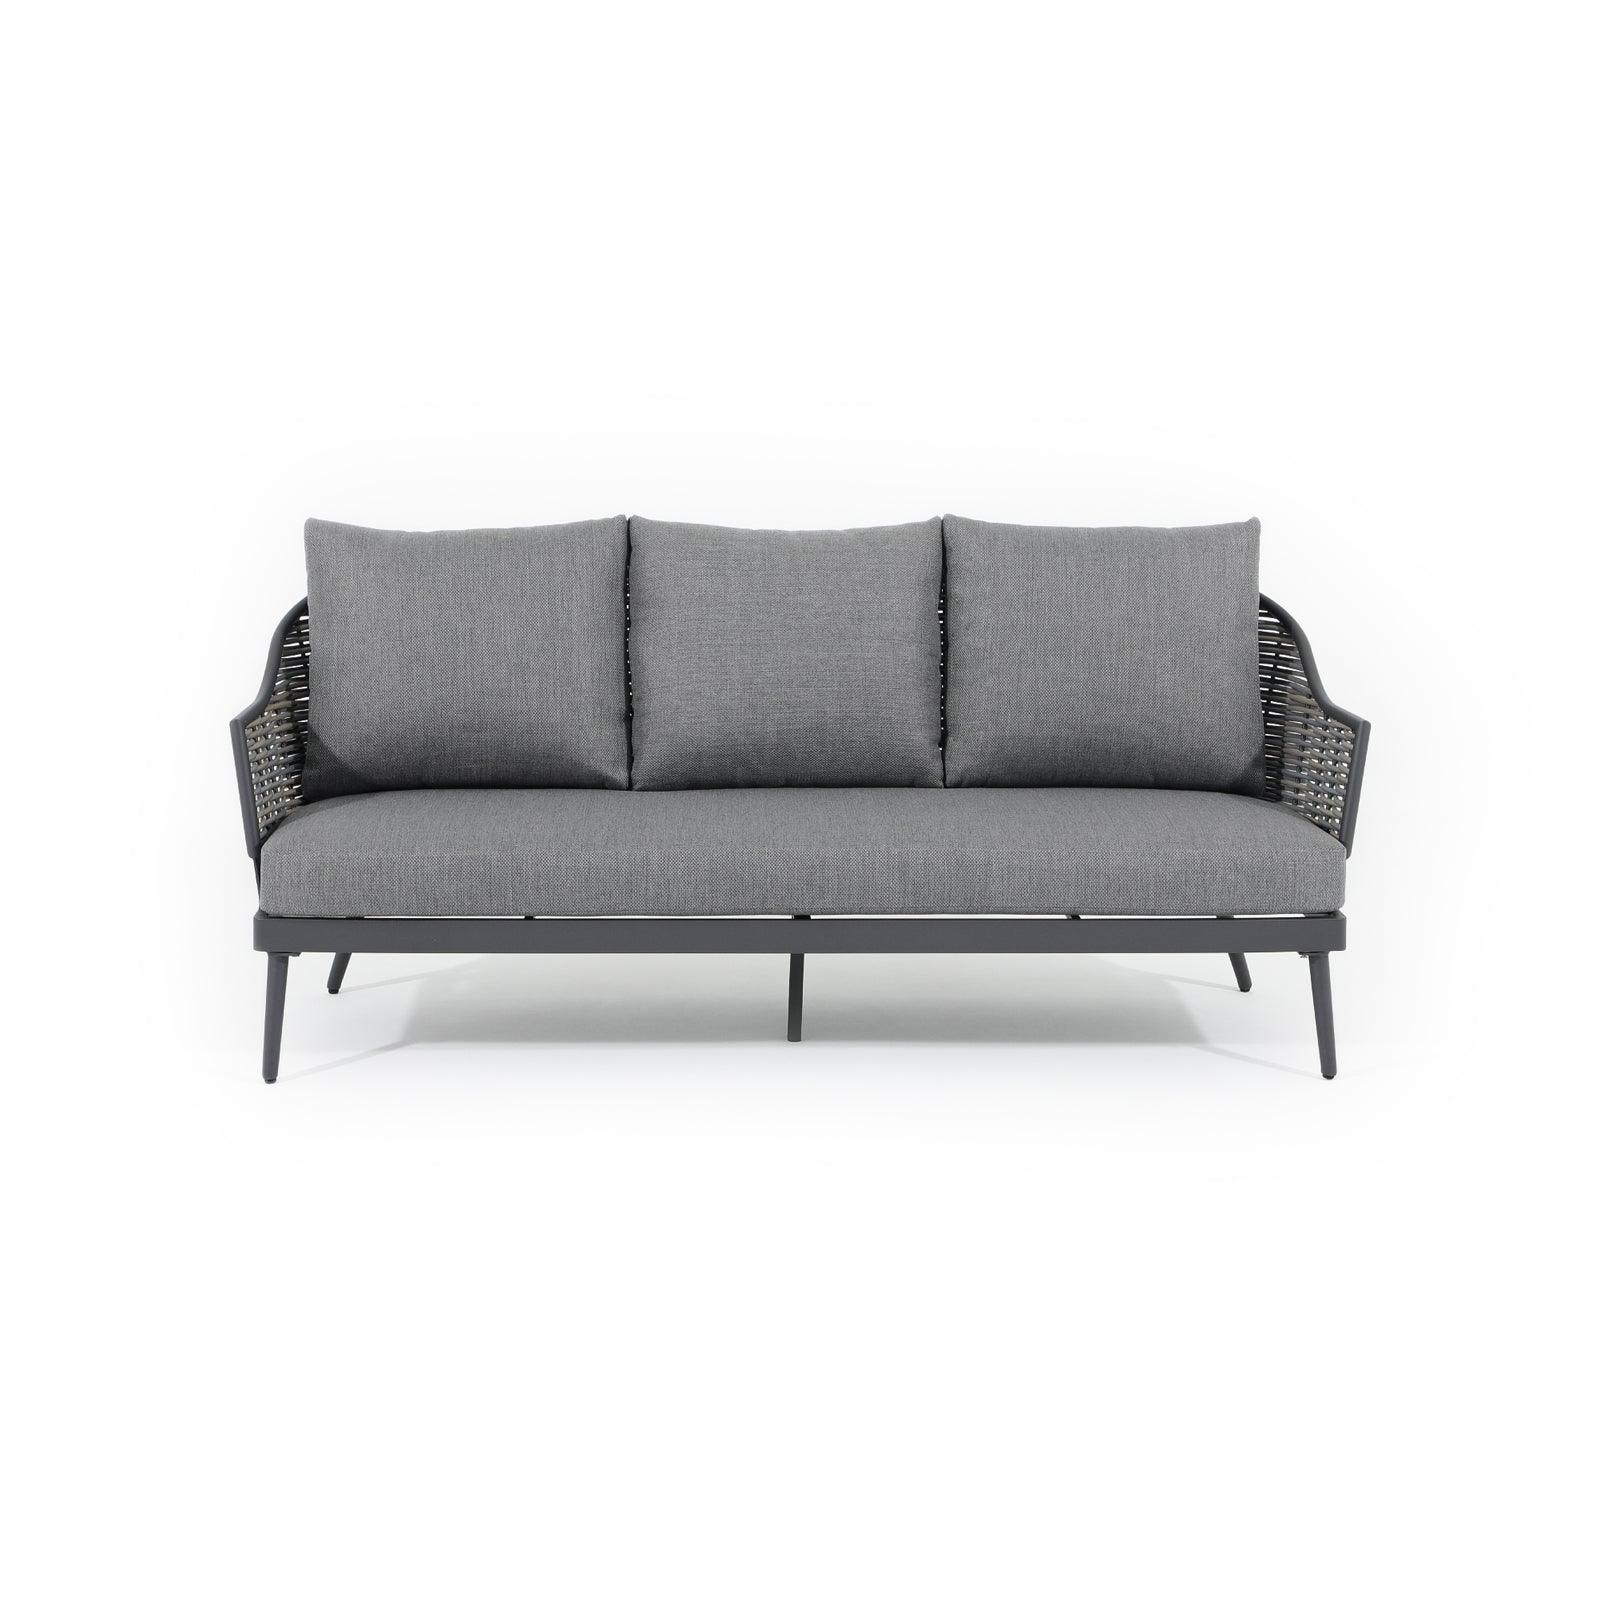 Burano Grey wicker outdoor Sofa with aluminum frame, grey cushions, 3 seat, front - Jardina Furniture